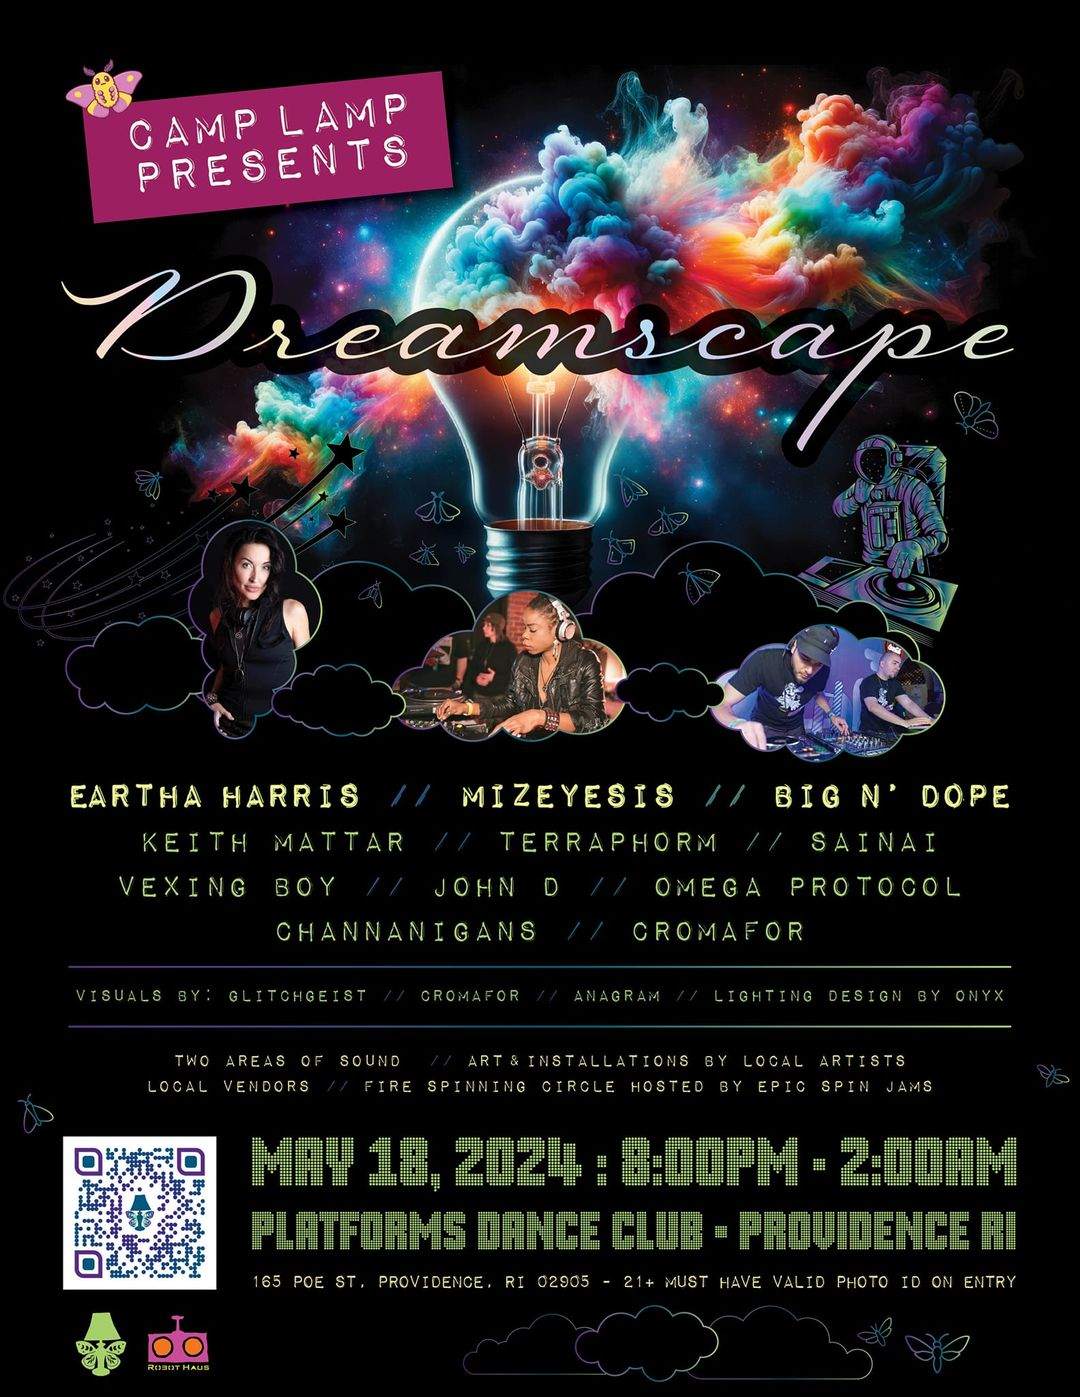 Camp Lamp presents Dreamscape - フライヤー表